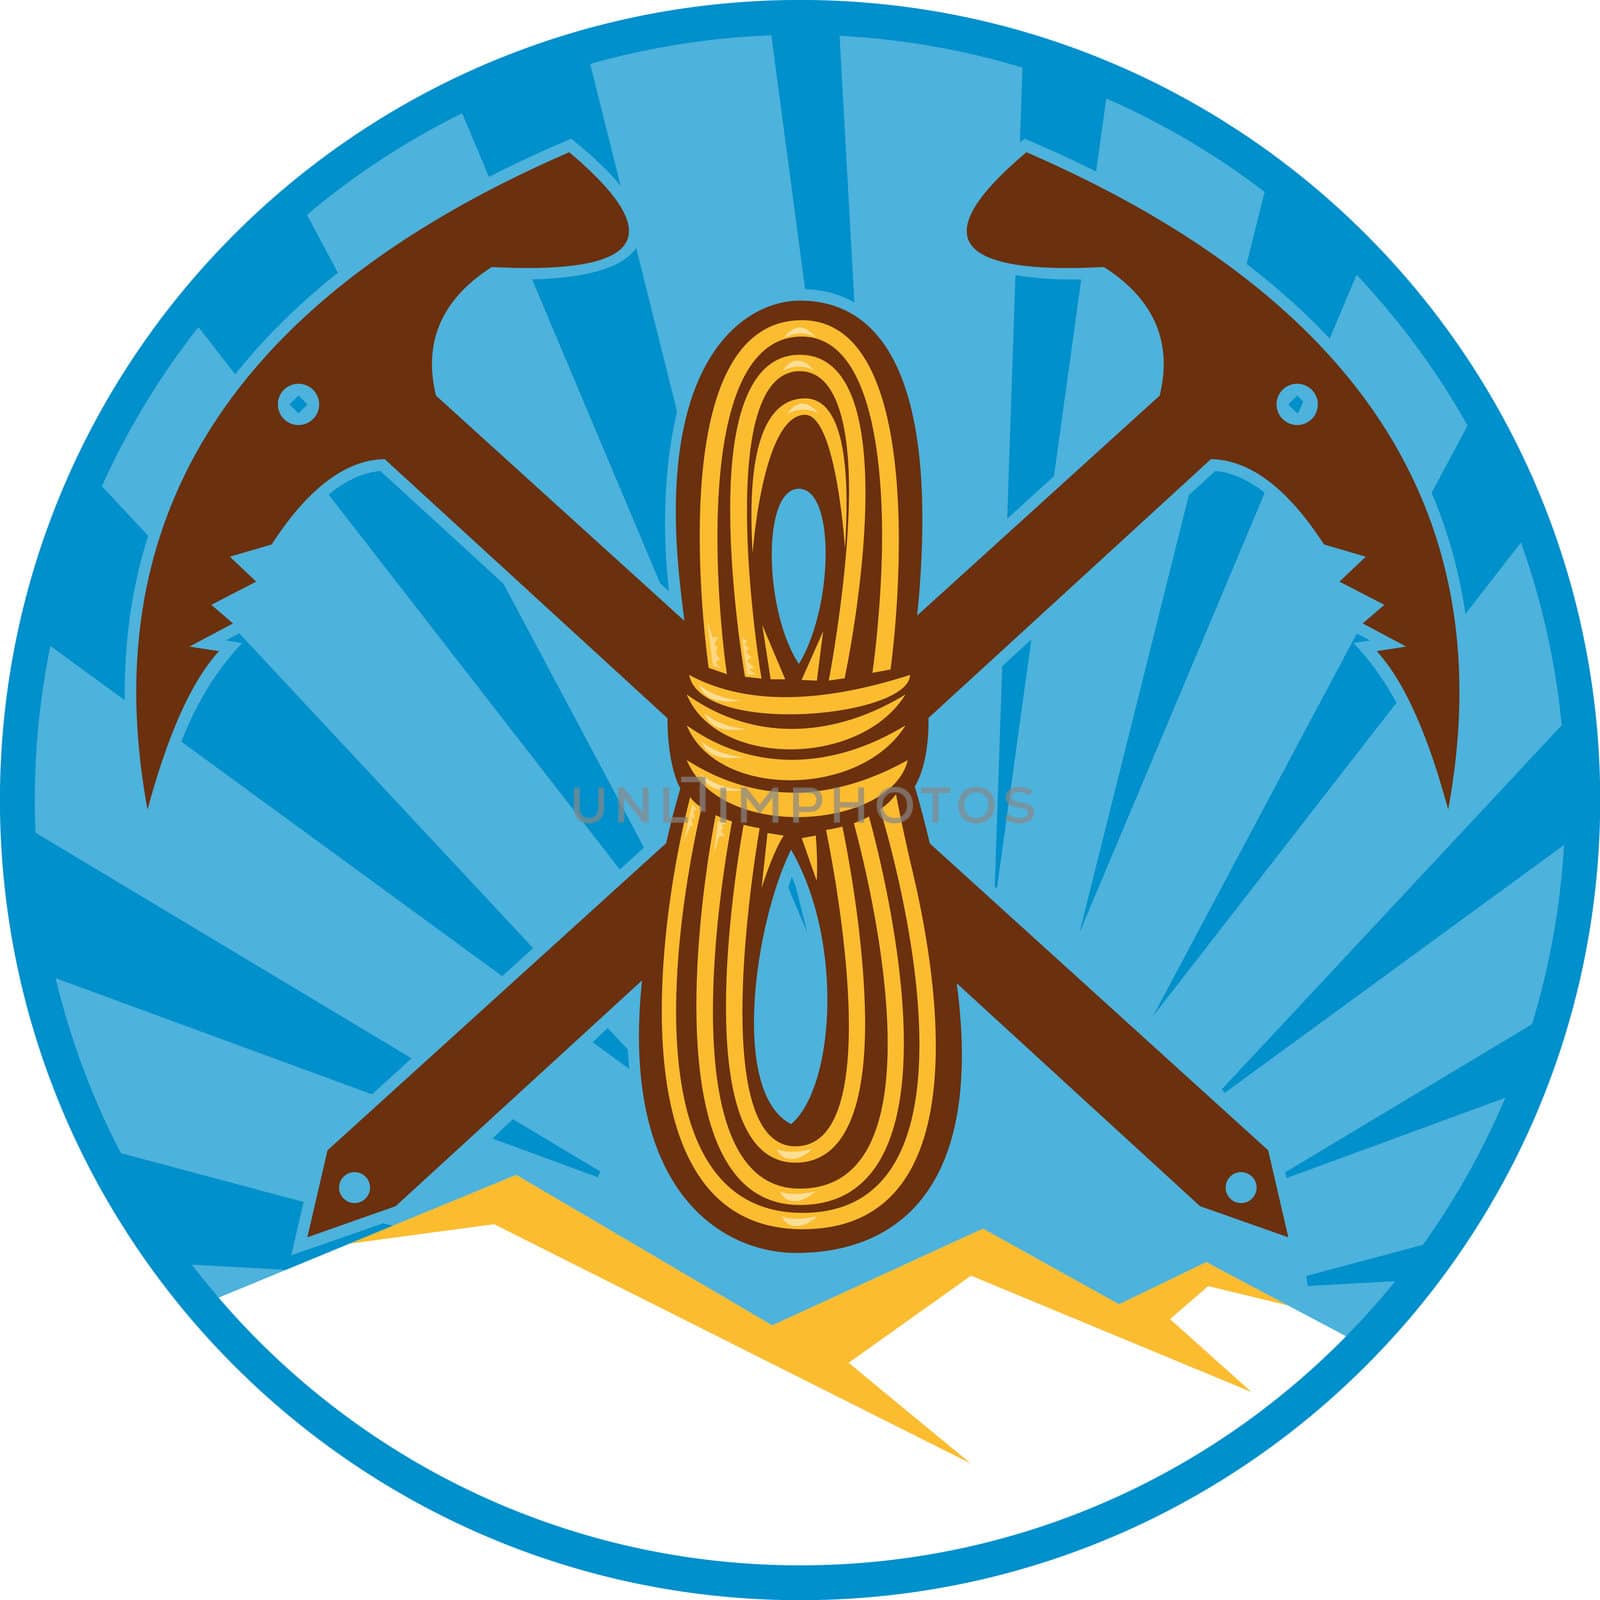 illustration of a crossed pick ax rope bundle mountain with sunburst set inside circle